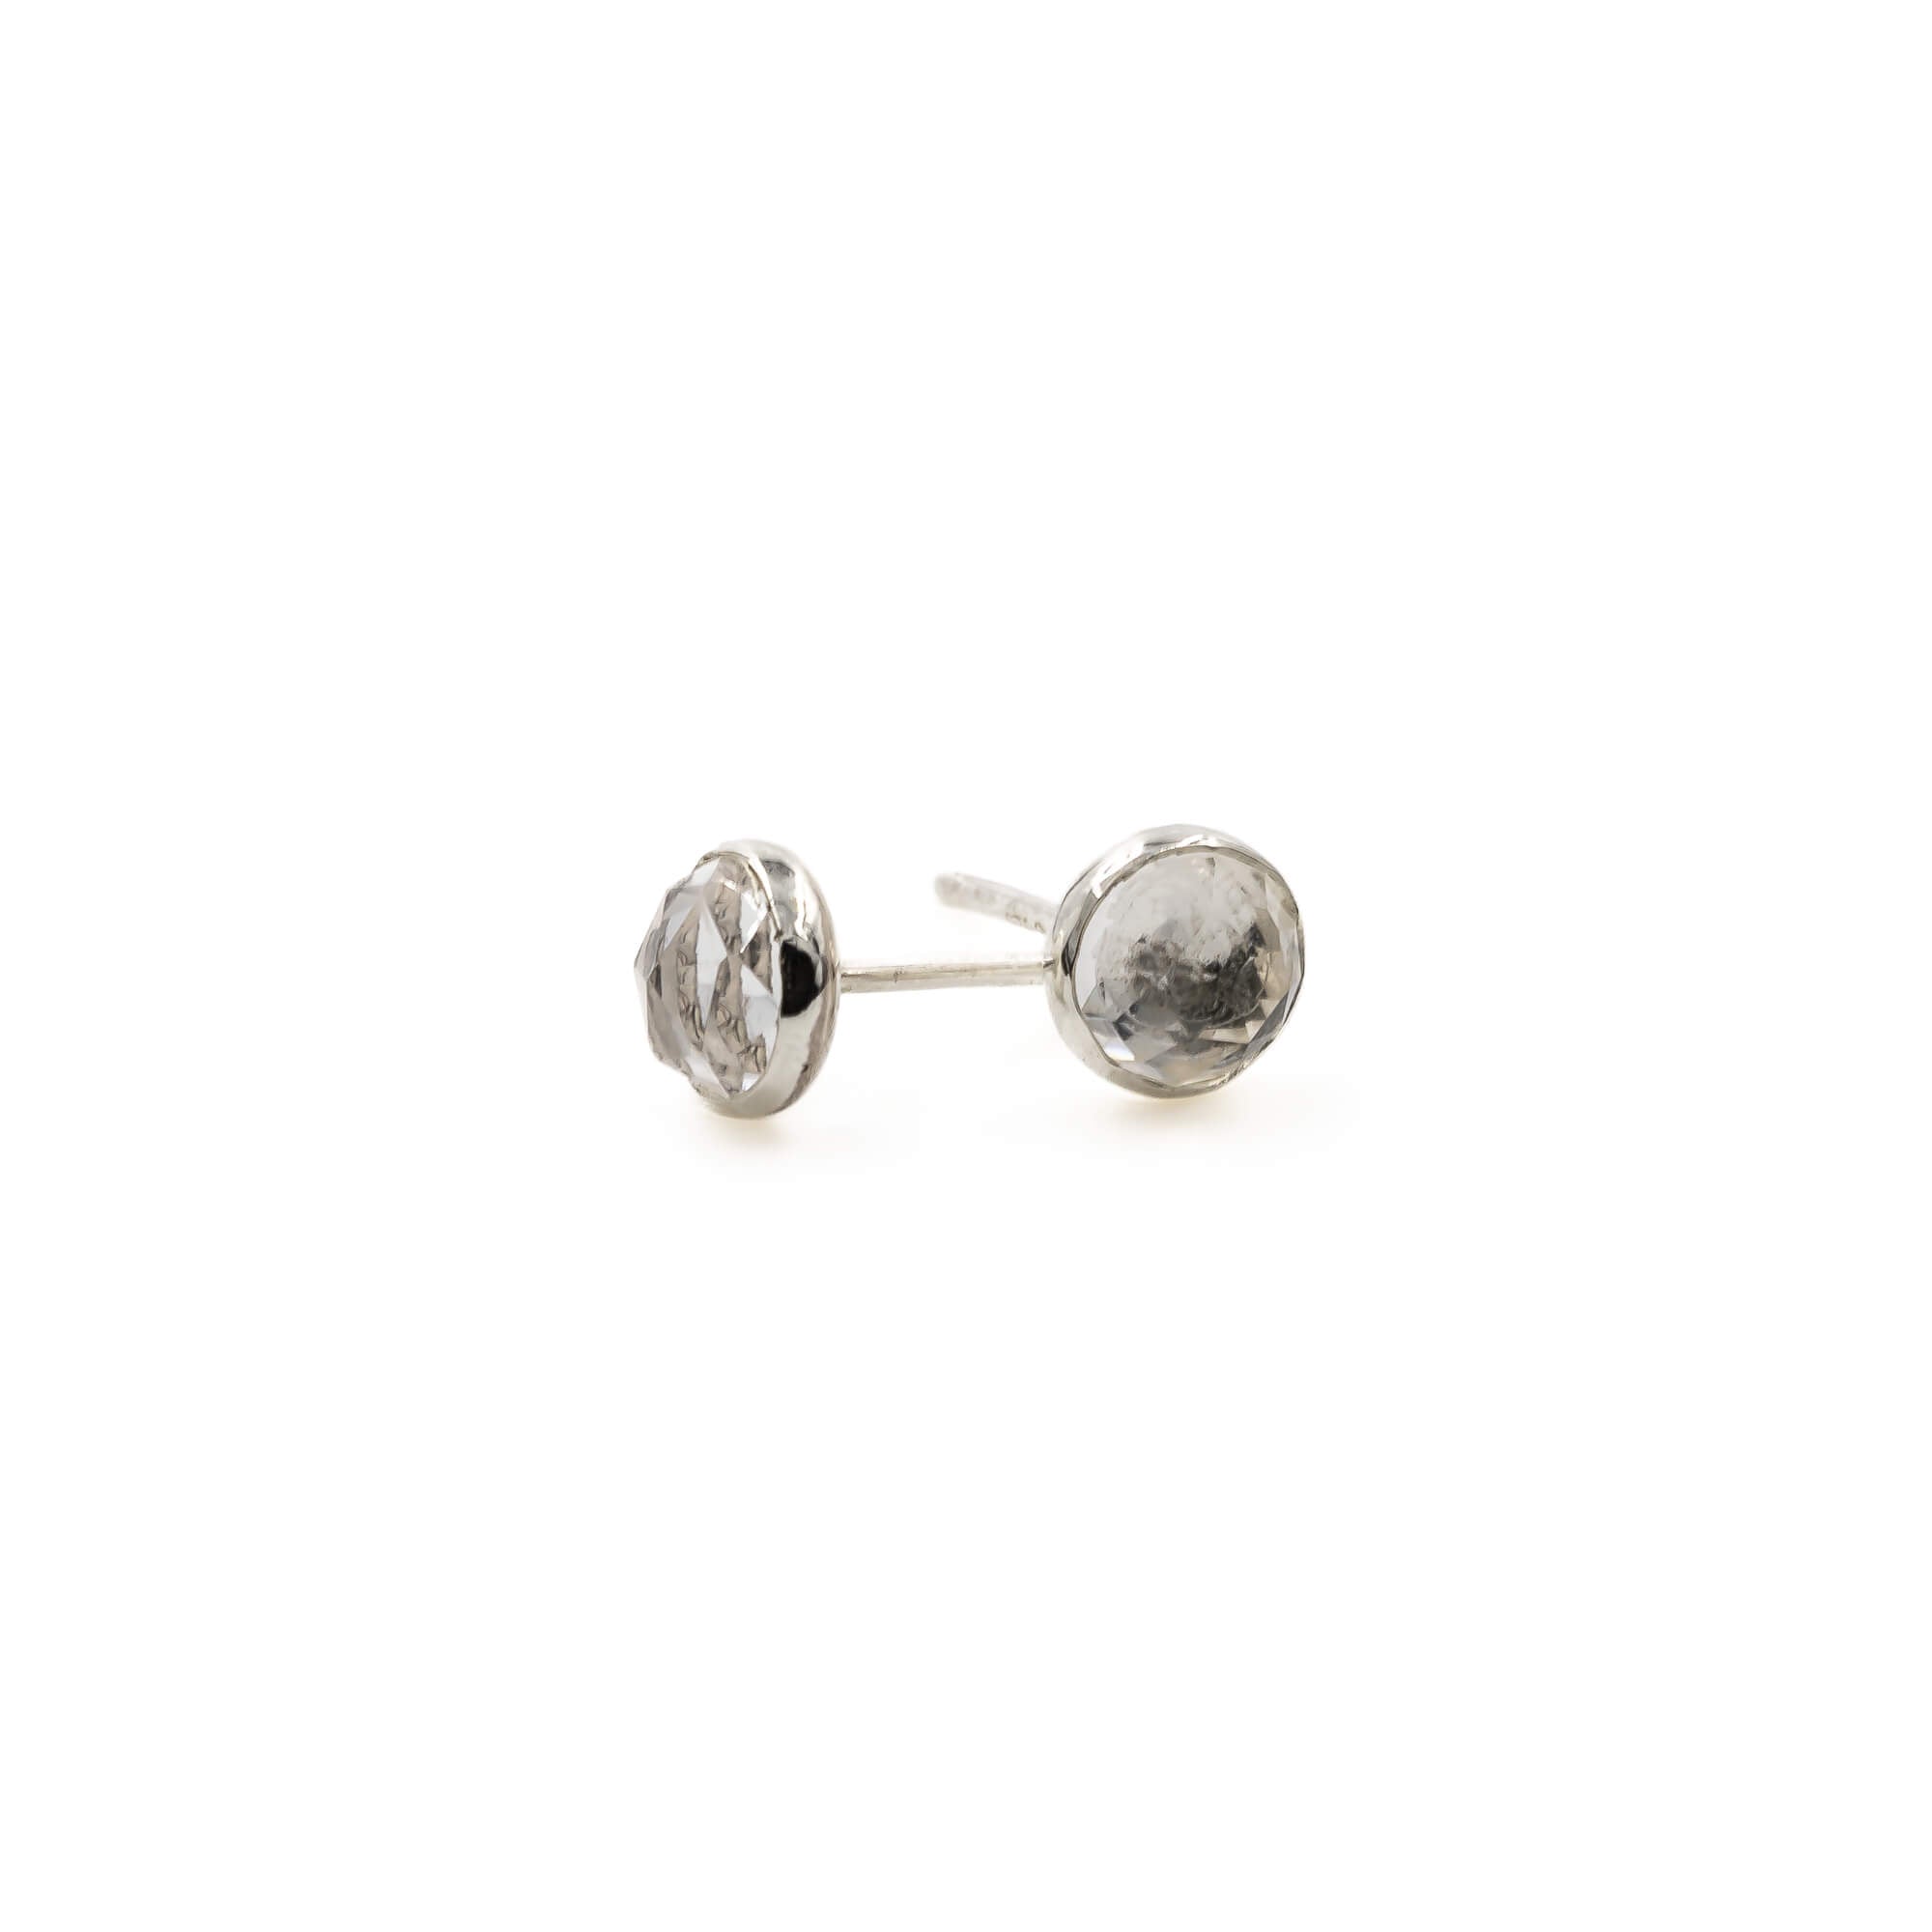 5 mm white topaz everyday stud earrings sterling silver